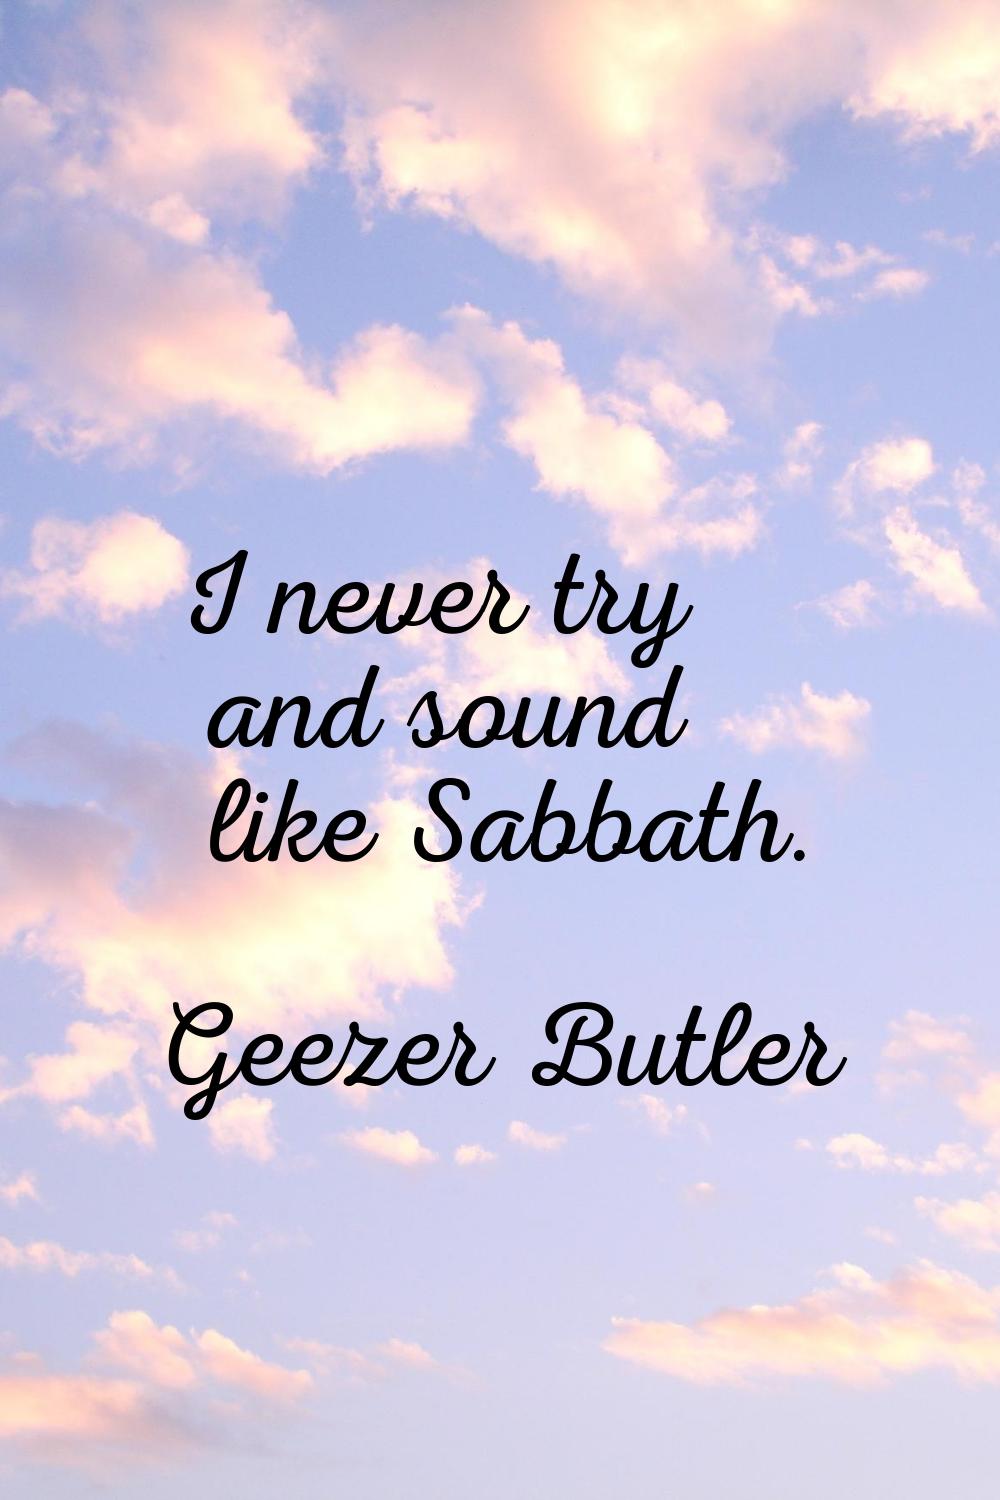 I never try and sound like Sabbath.